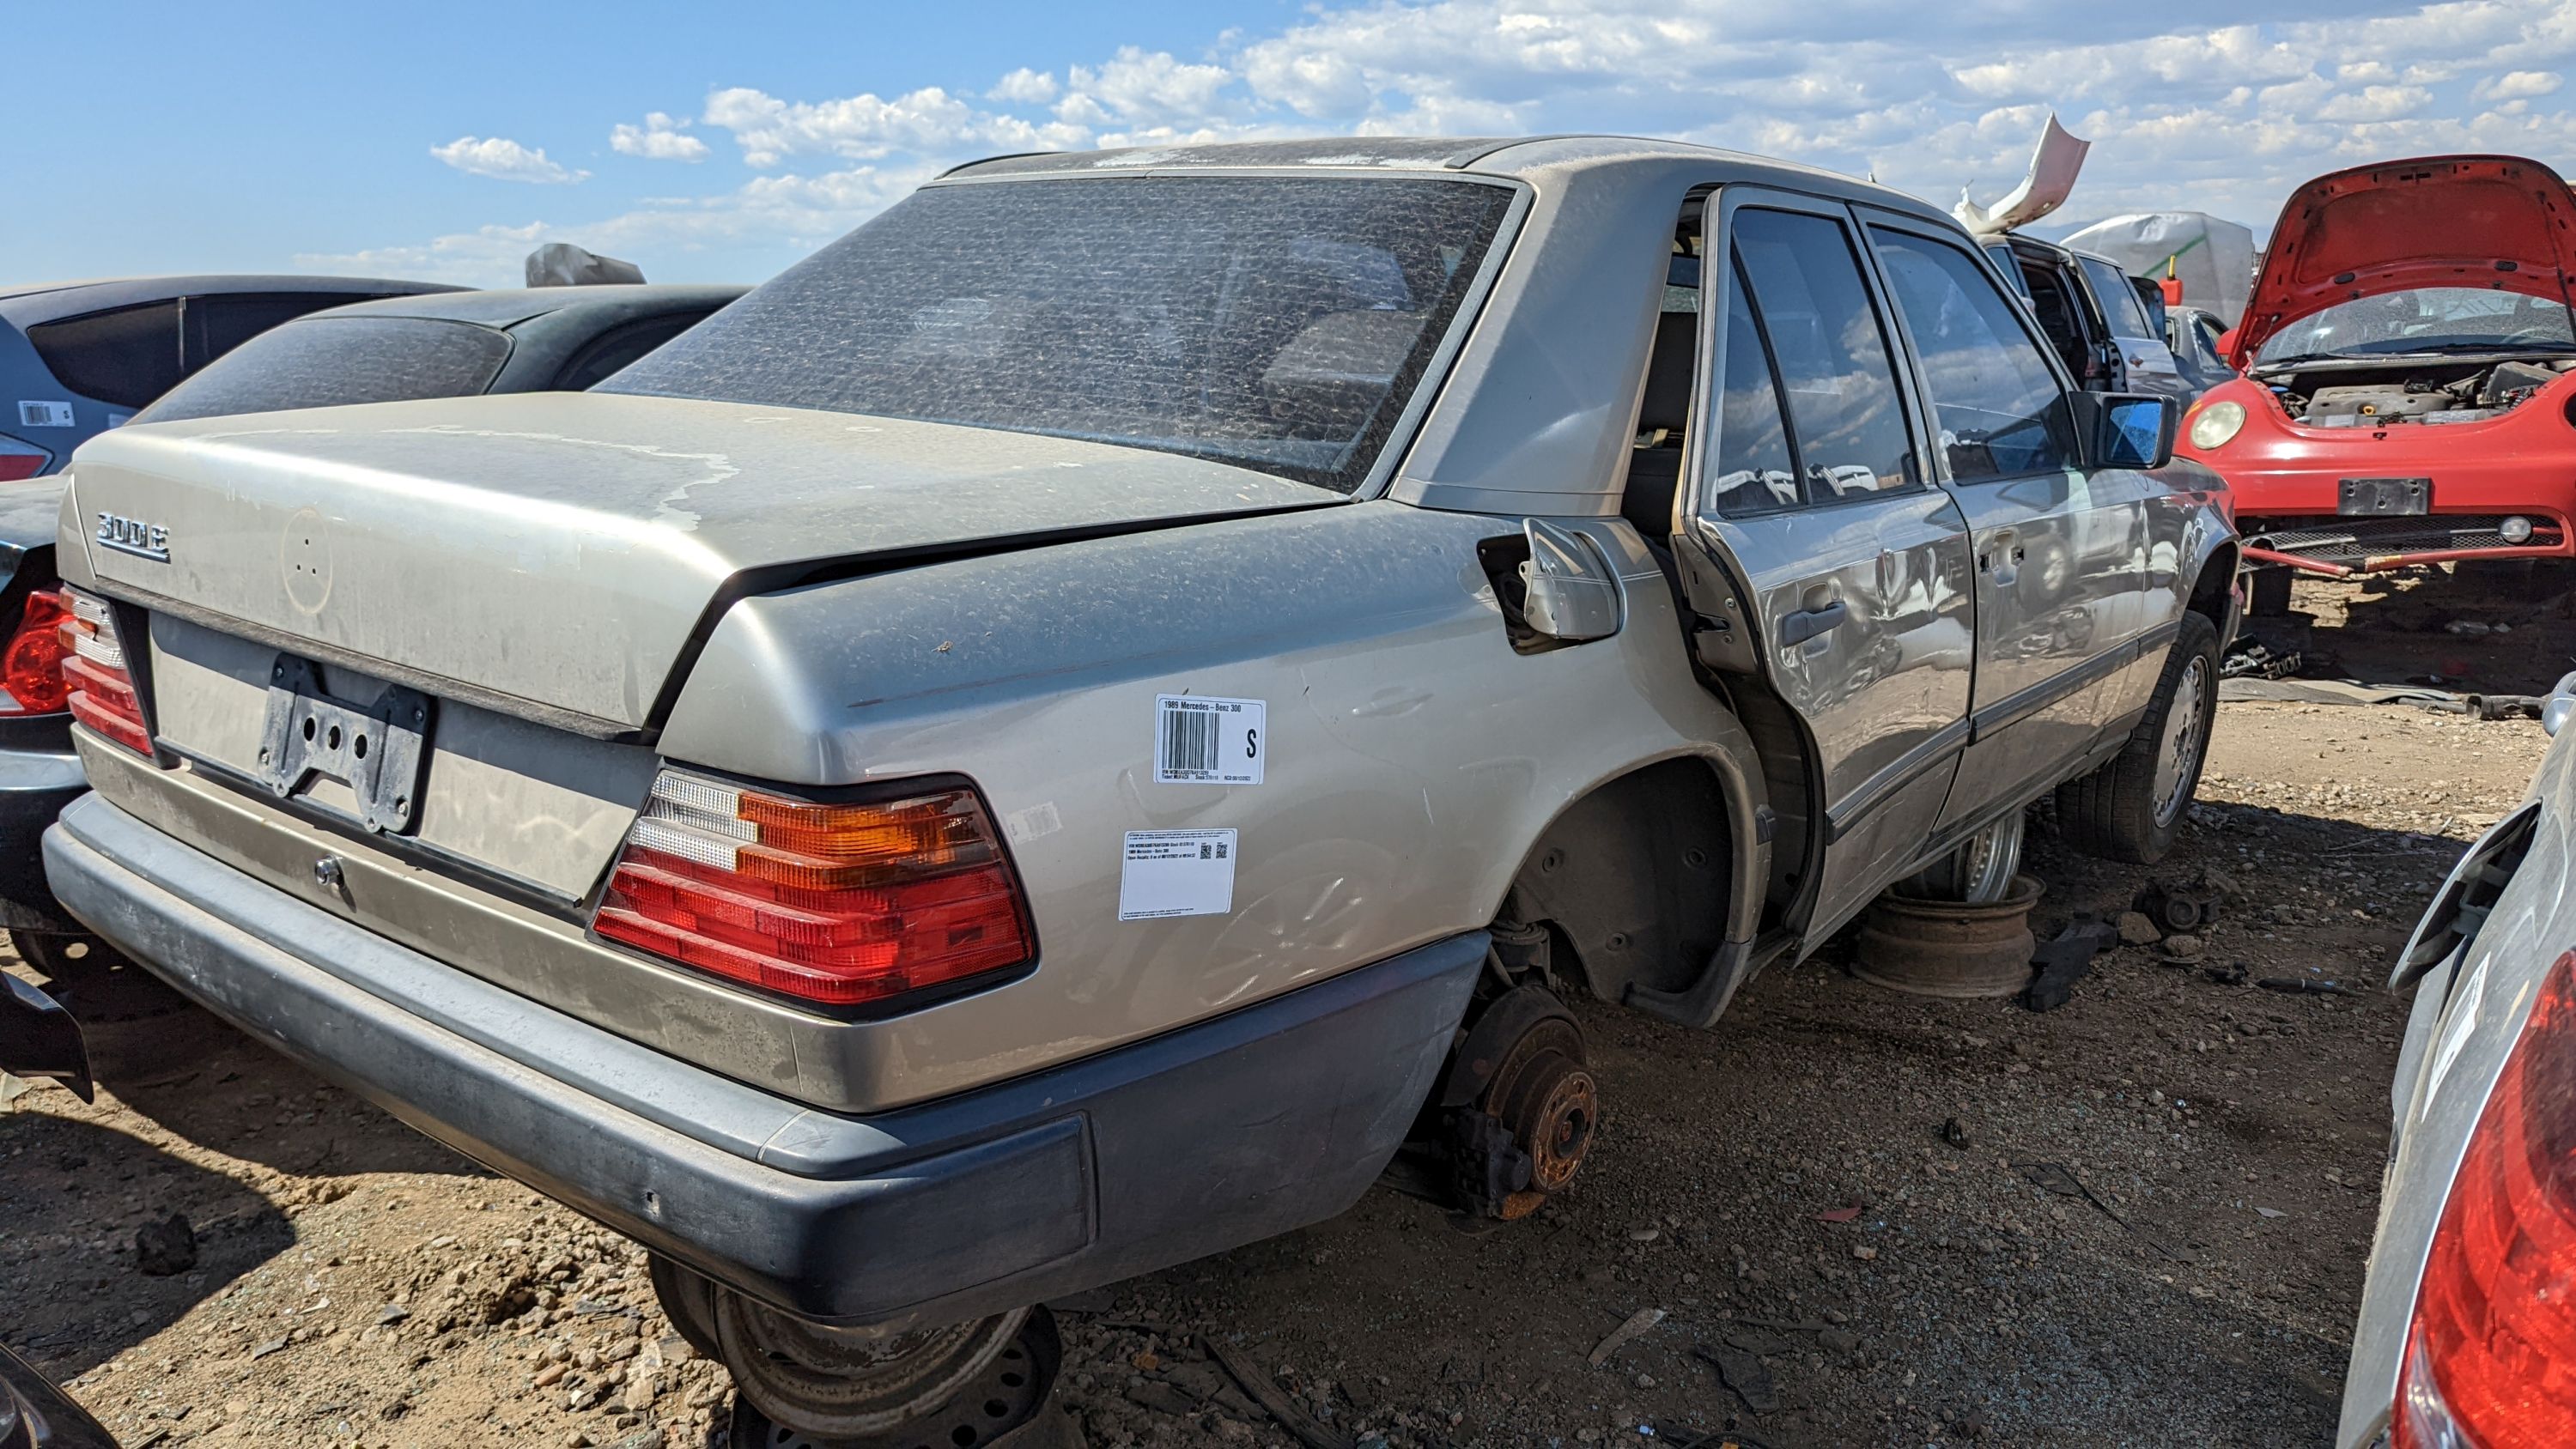 25 - 1989 Mercedes-Benz 300E W124 in Colorado junkyard - photo by Murilee Martin